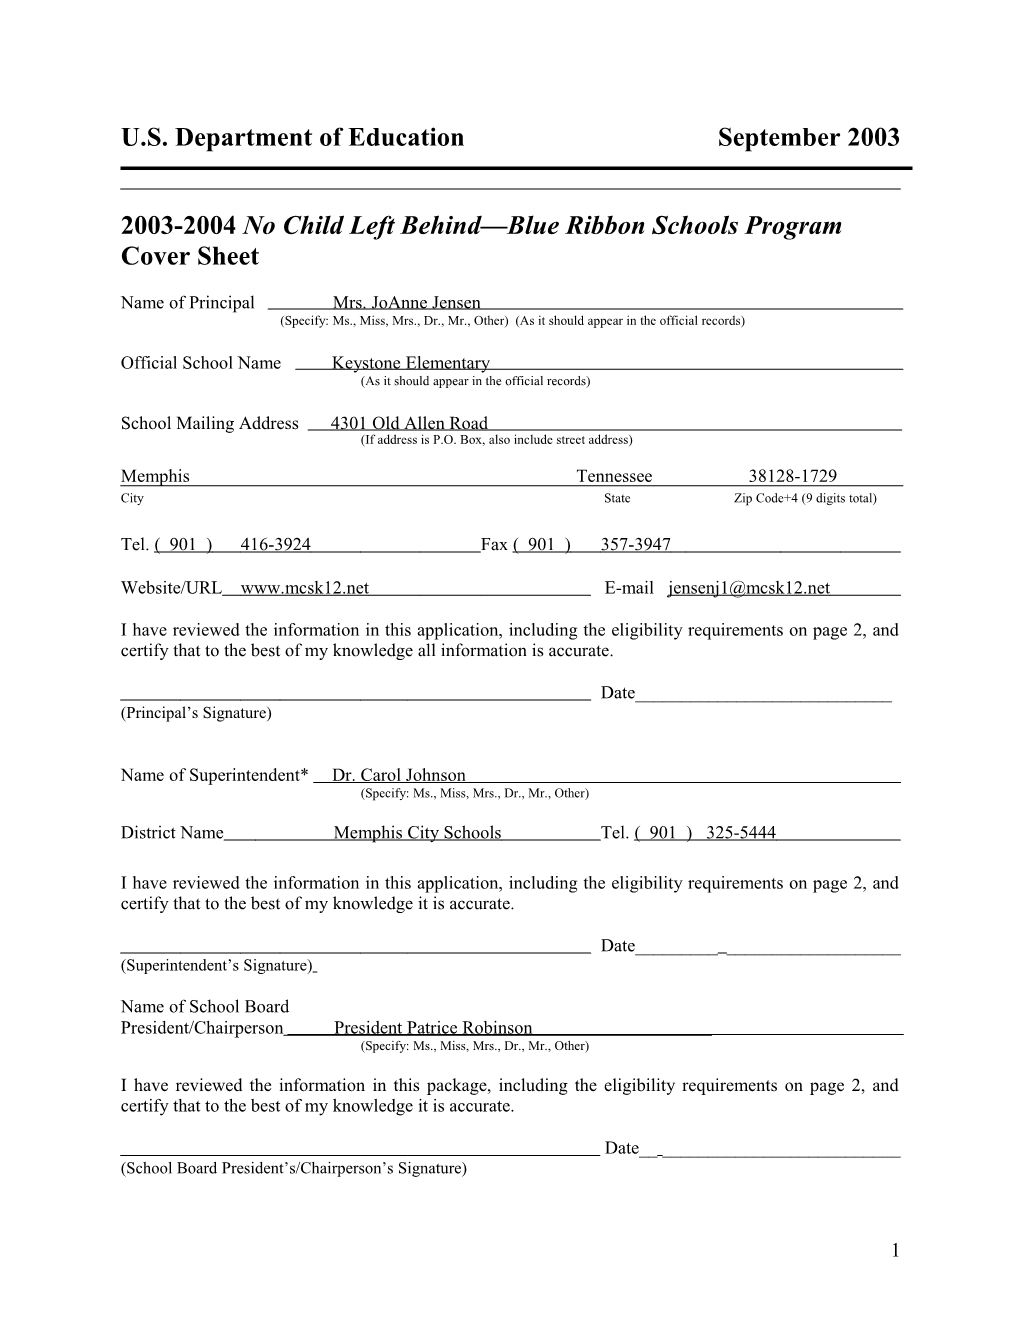 Keystone Elementary School 2004 No Child Left Behind-Blue Ribbon School Application (Msword)